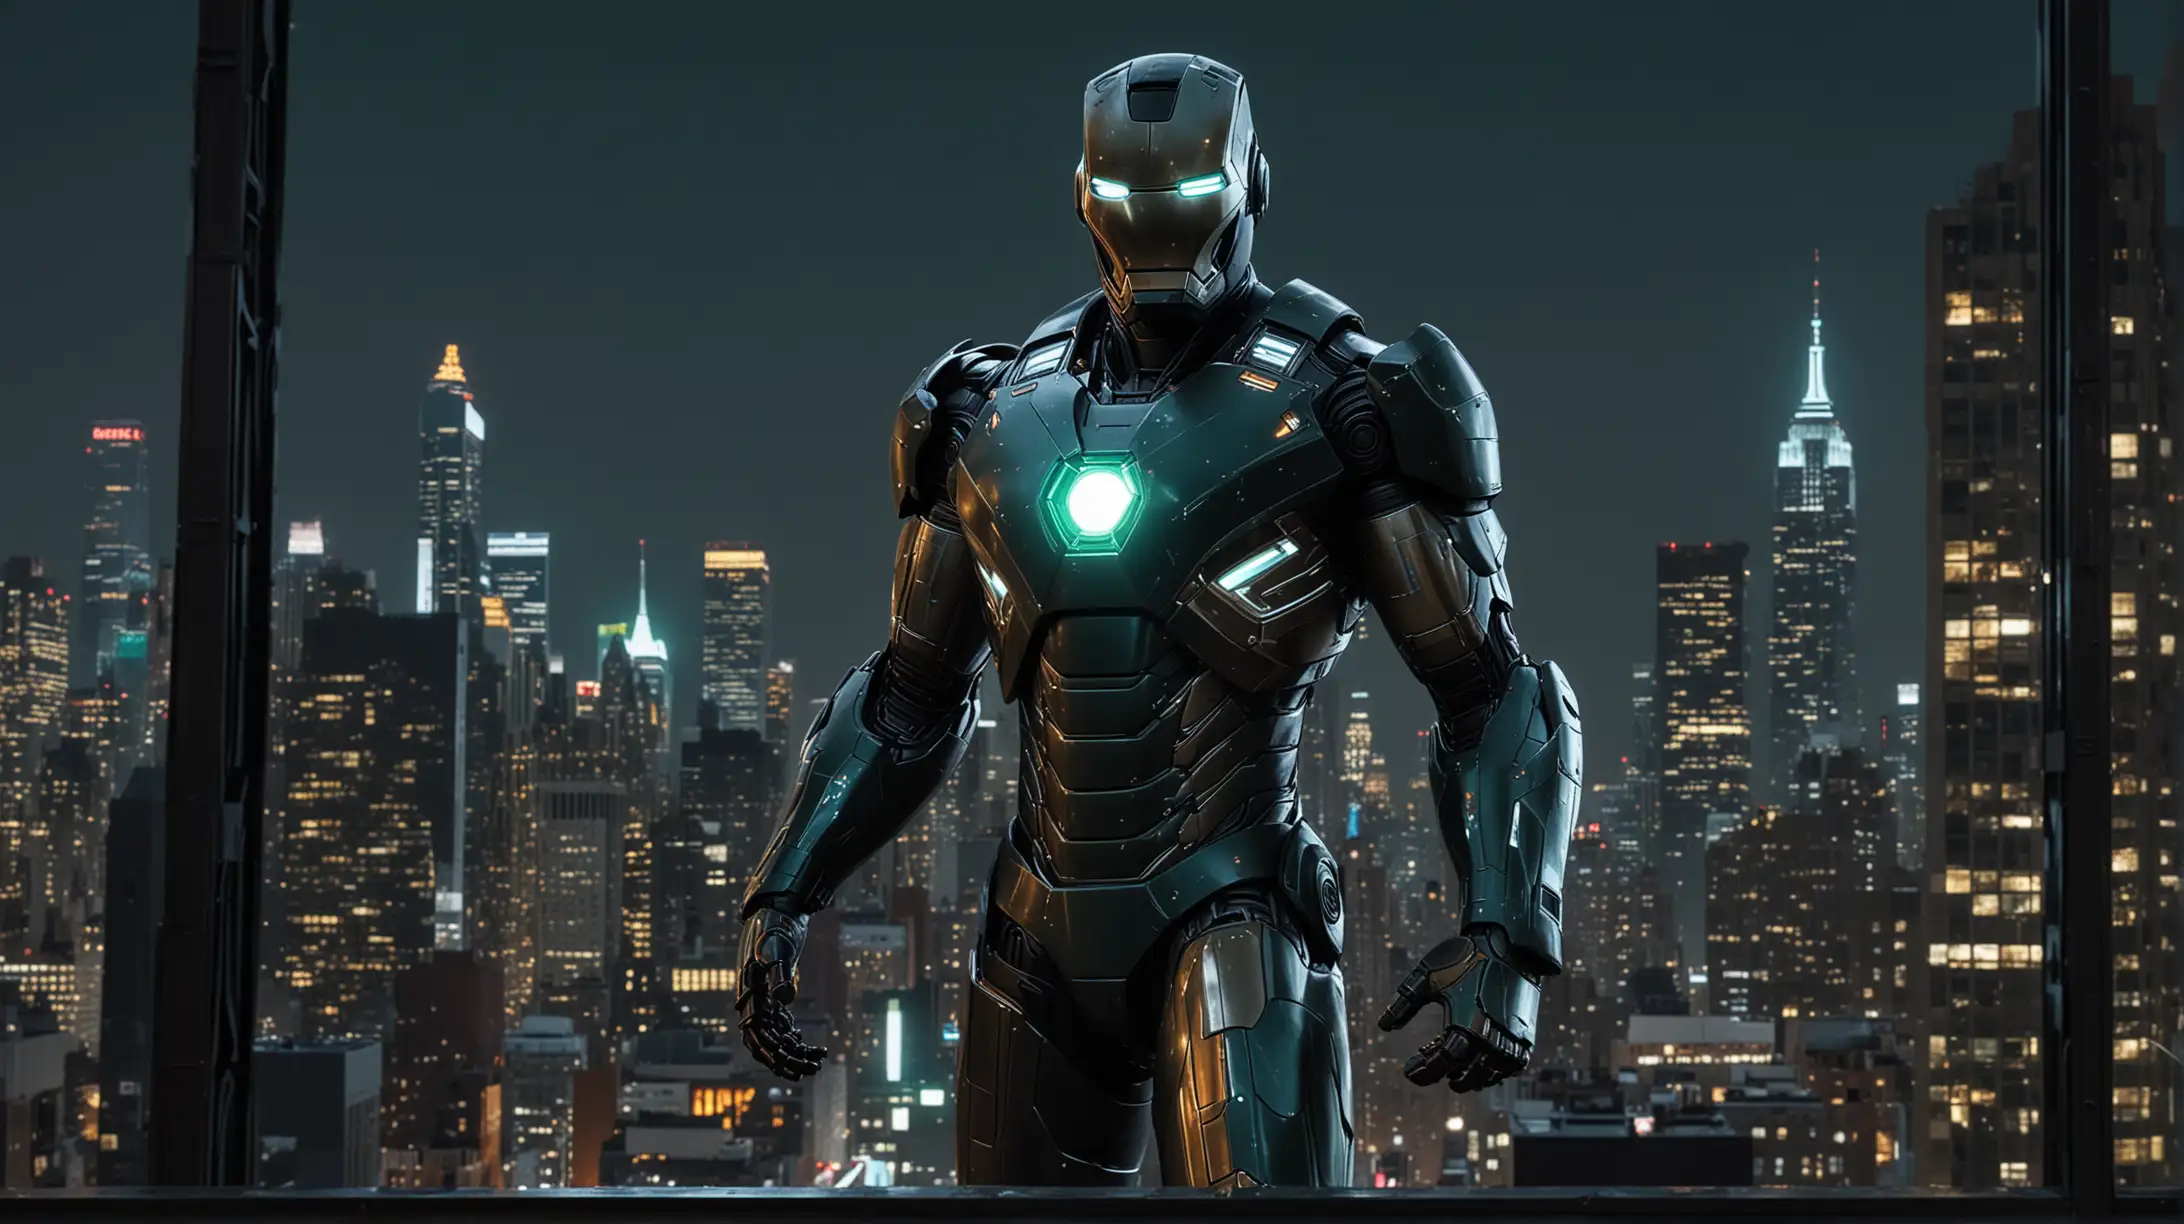 Futuristic New York City Skyline with Iron Man Mark 33 Suit at Night